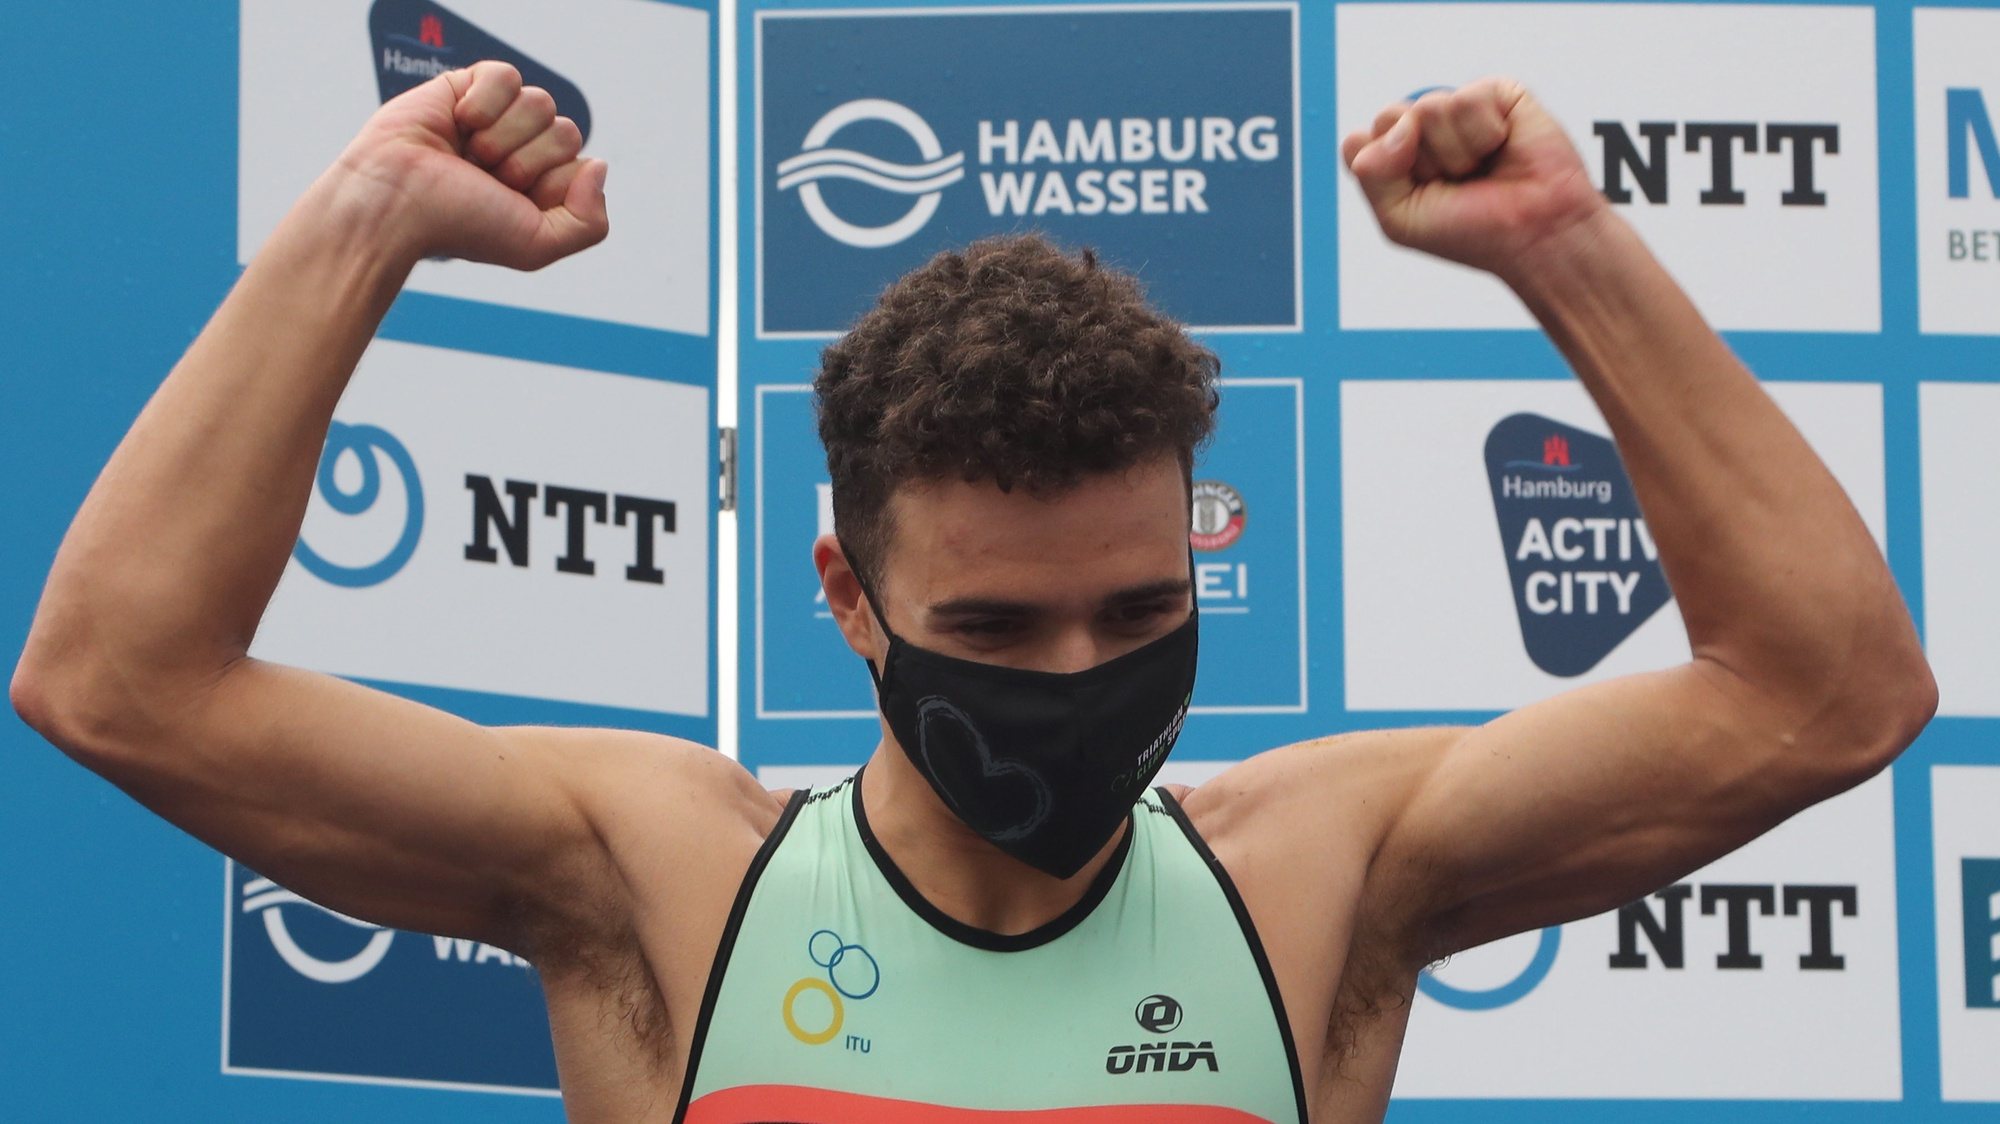 epa08649353 Vasco Vilaca from Portugal celebrates his second place in the Men’s Elite race of the Hamburg Wasser World Triathlon event in Hamburg, northern Germany, 05 September 2020.  EPA/FOCKE STRANGMANN